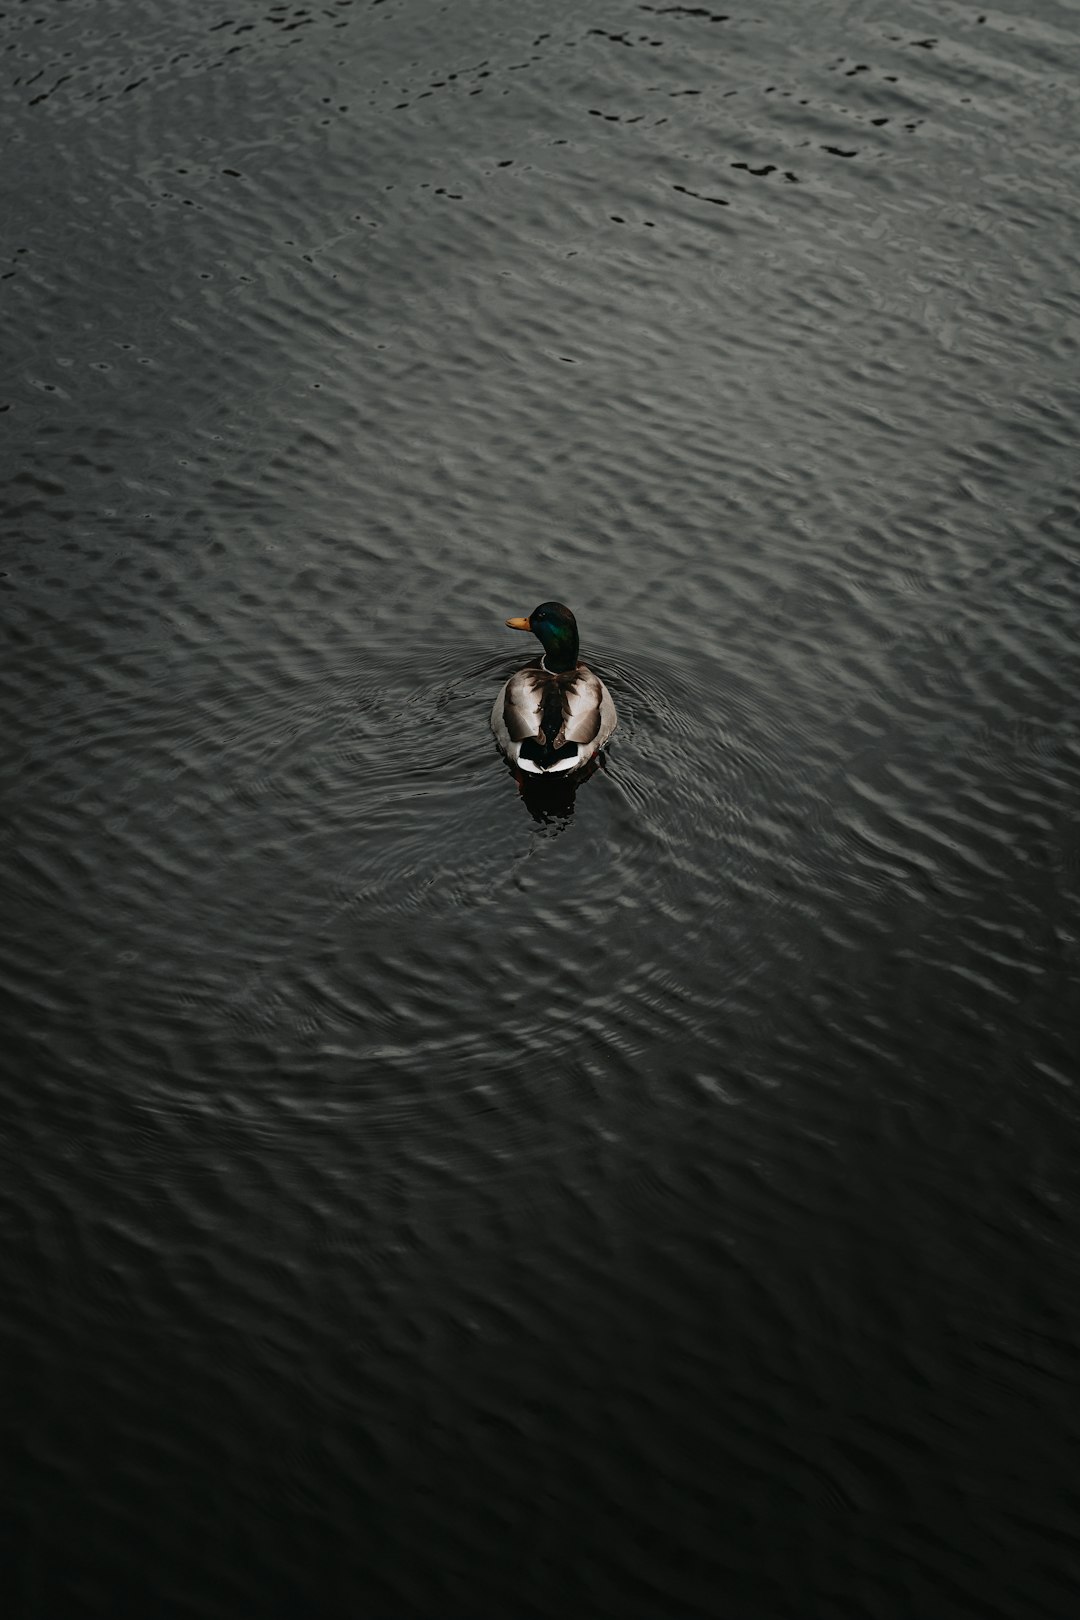 two mallard ducks on water